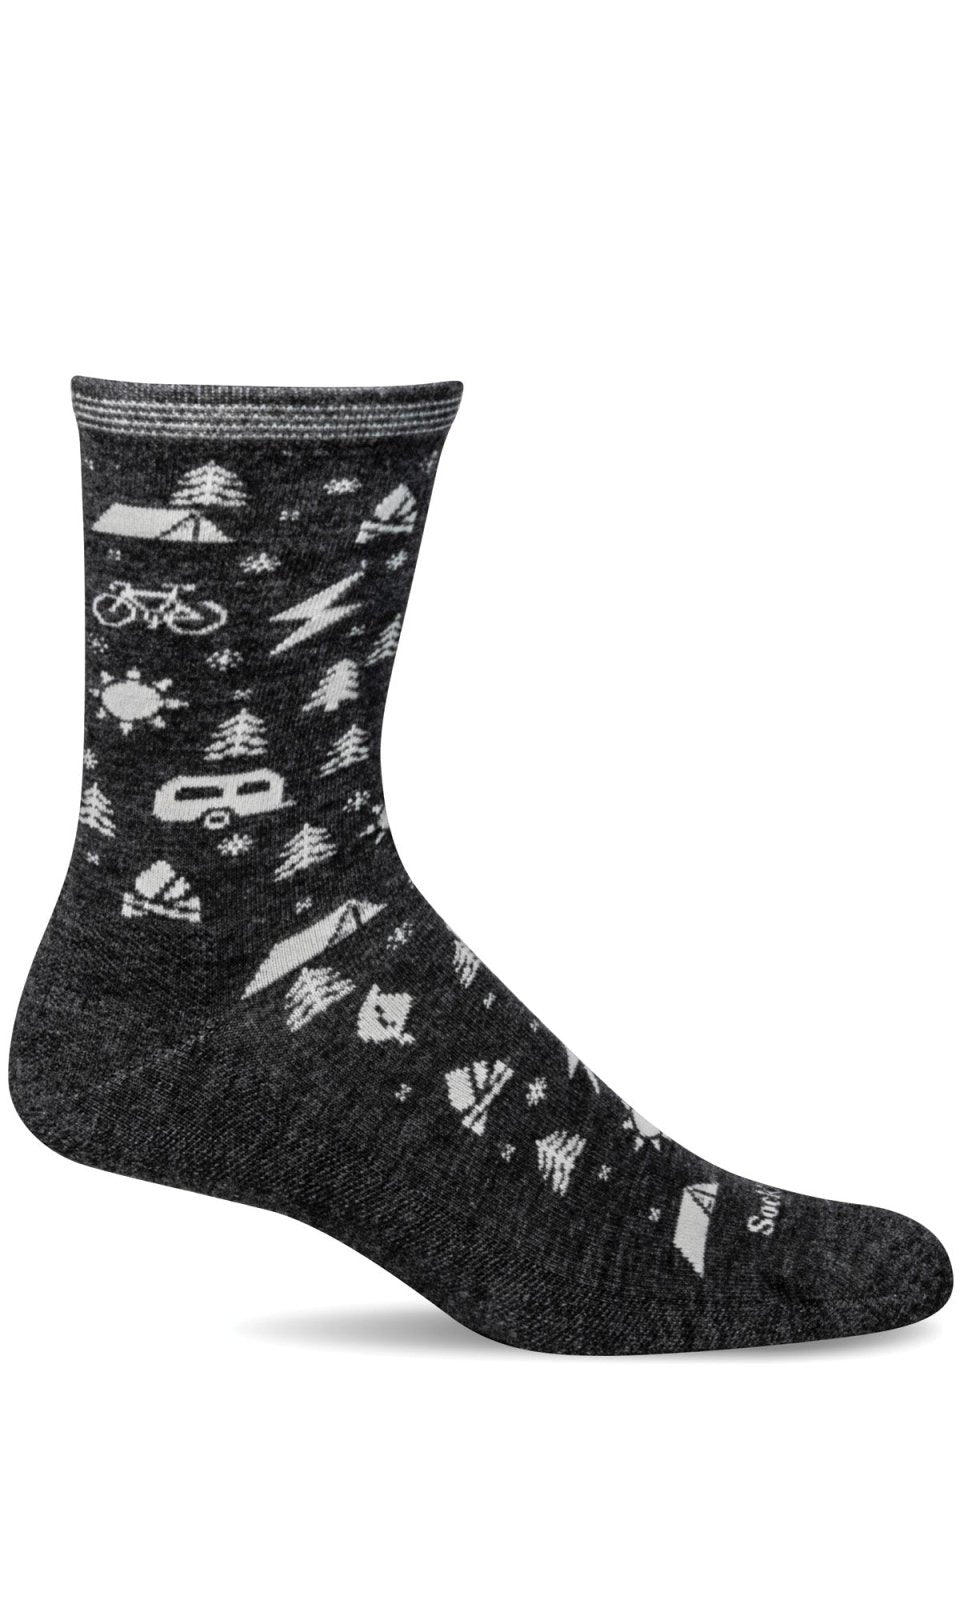 Women's Campy | Essential Comfort Socks - Merino Wool Essential Comfort - Sockwell